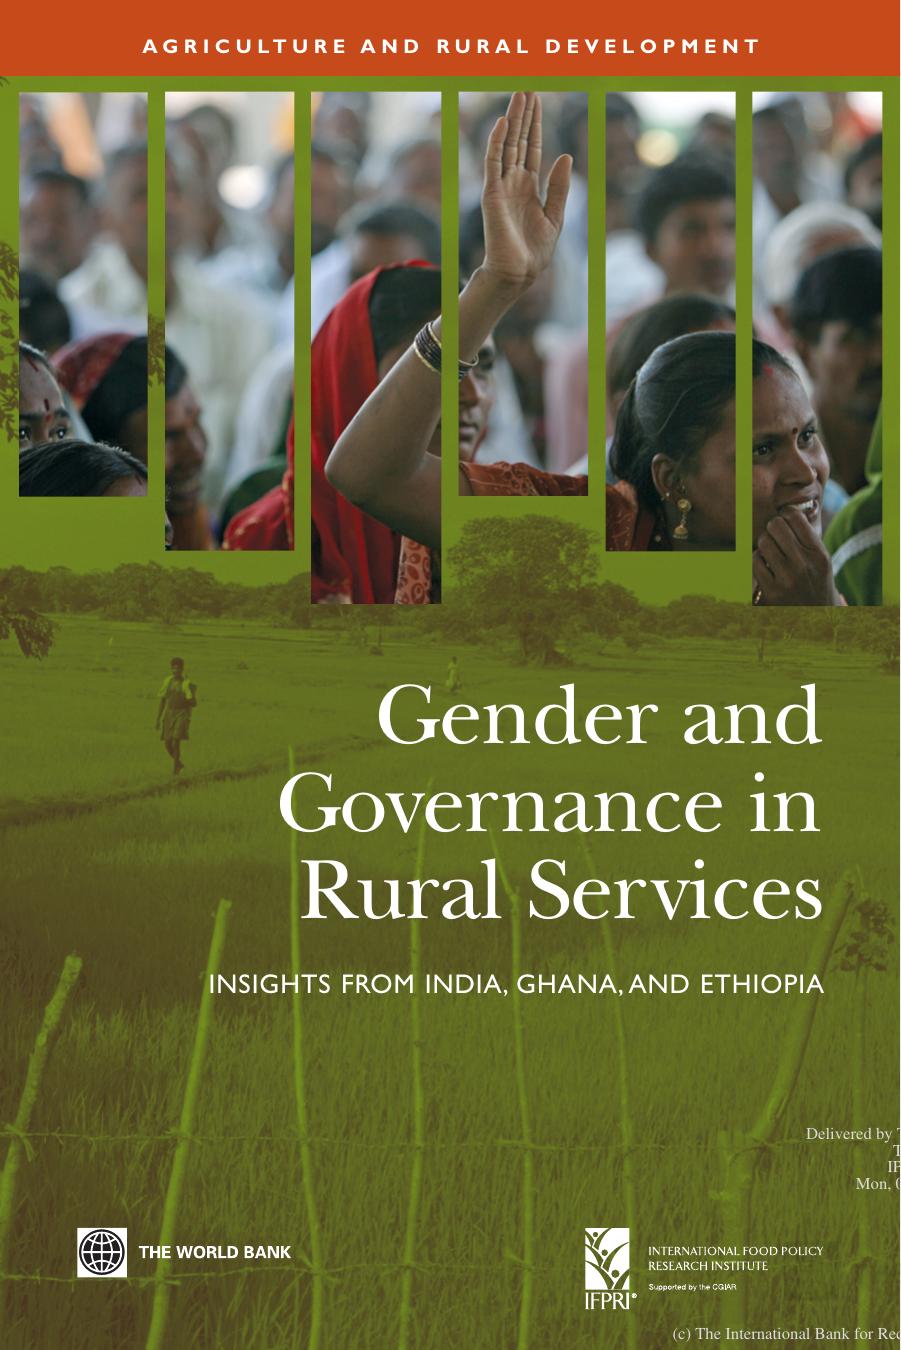 Gender and Governance in Rural Services 2010